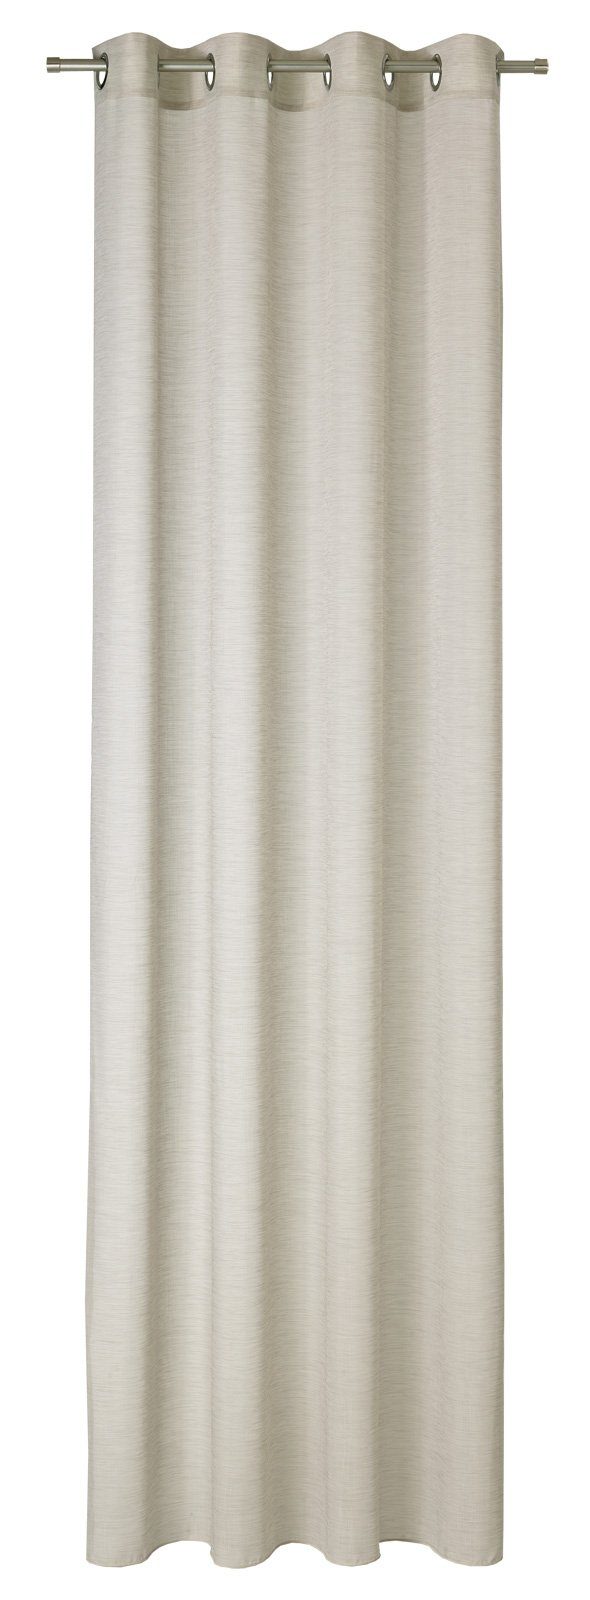 Vorhang Allure, Neutex for Metallösen (1 Ösenschal mit Jacquard, 245x140, St), Ösen halbtransparent, HxB: you